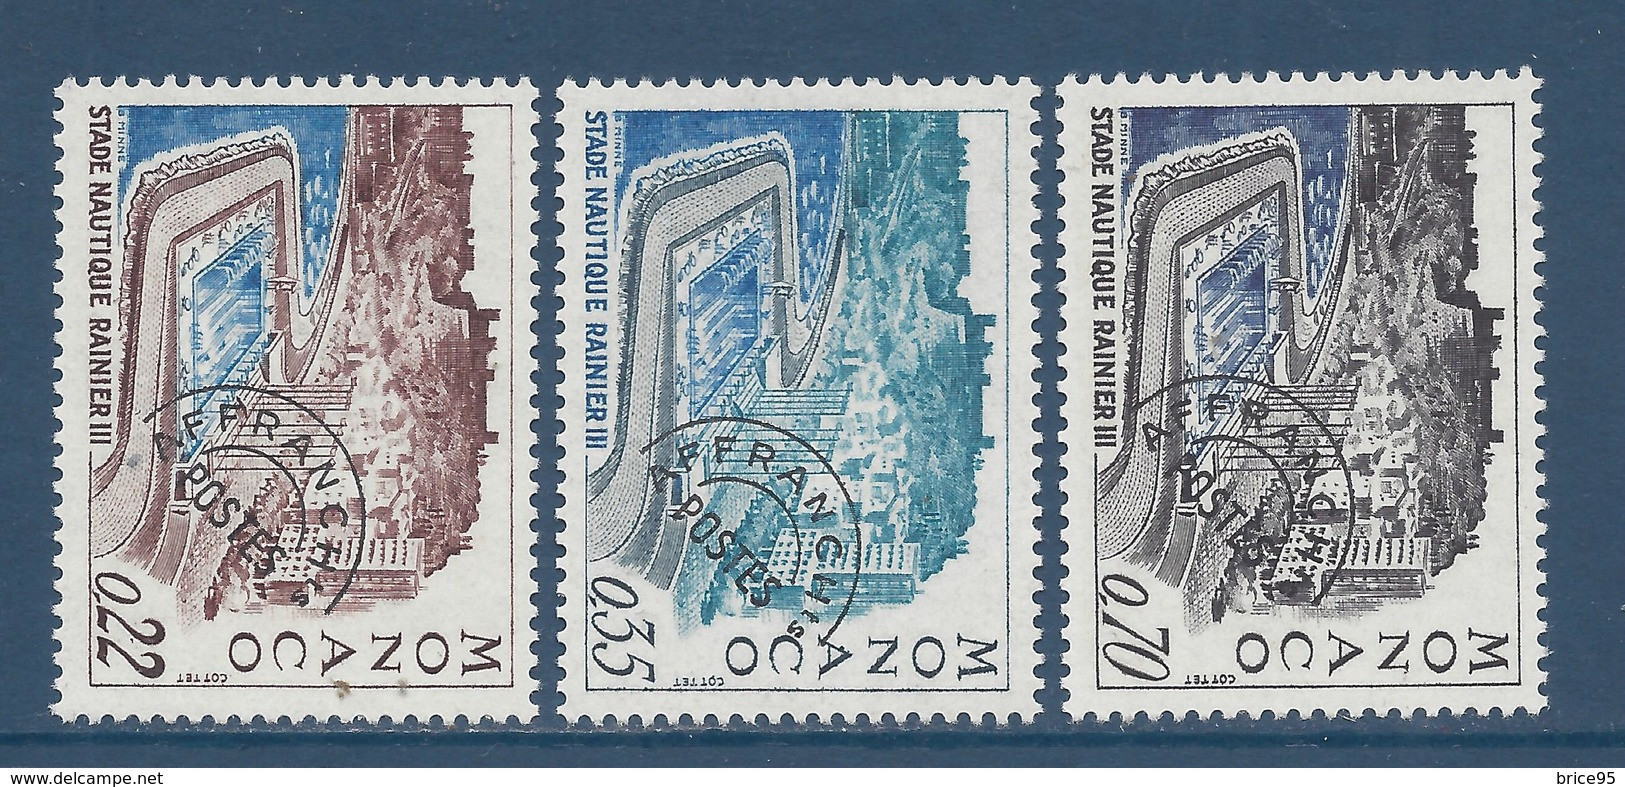 Monaco Préoblitéré - YT N° 27 à 29 ** - Neuf Sans Charnière - 1969 - Preobliterati